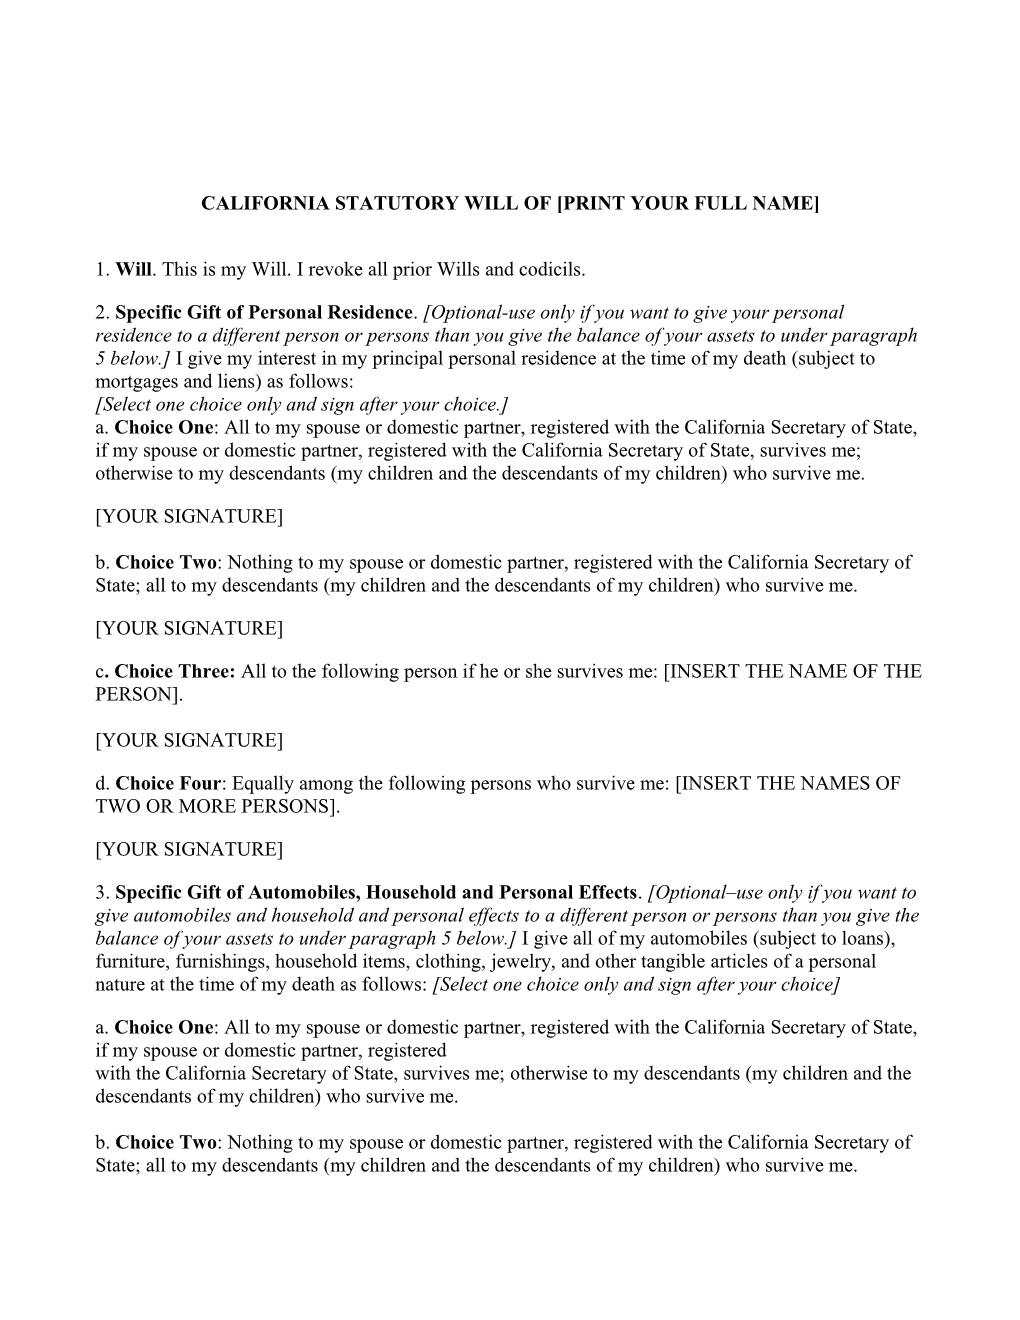 California Statutory Will of Print Your Full Name